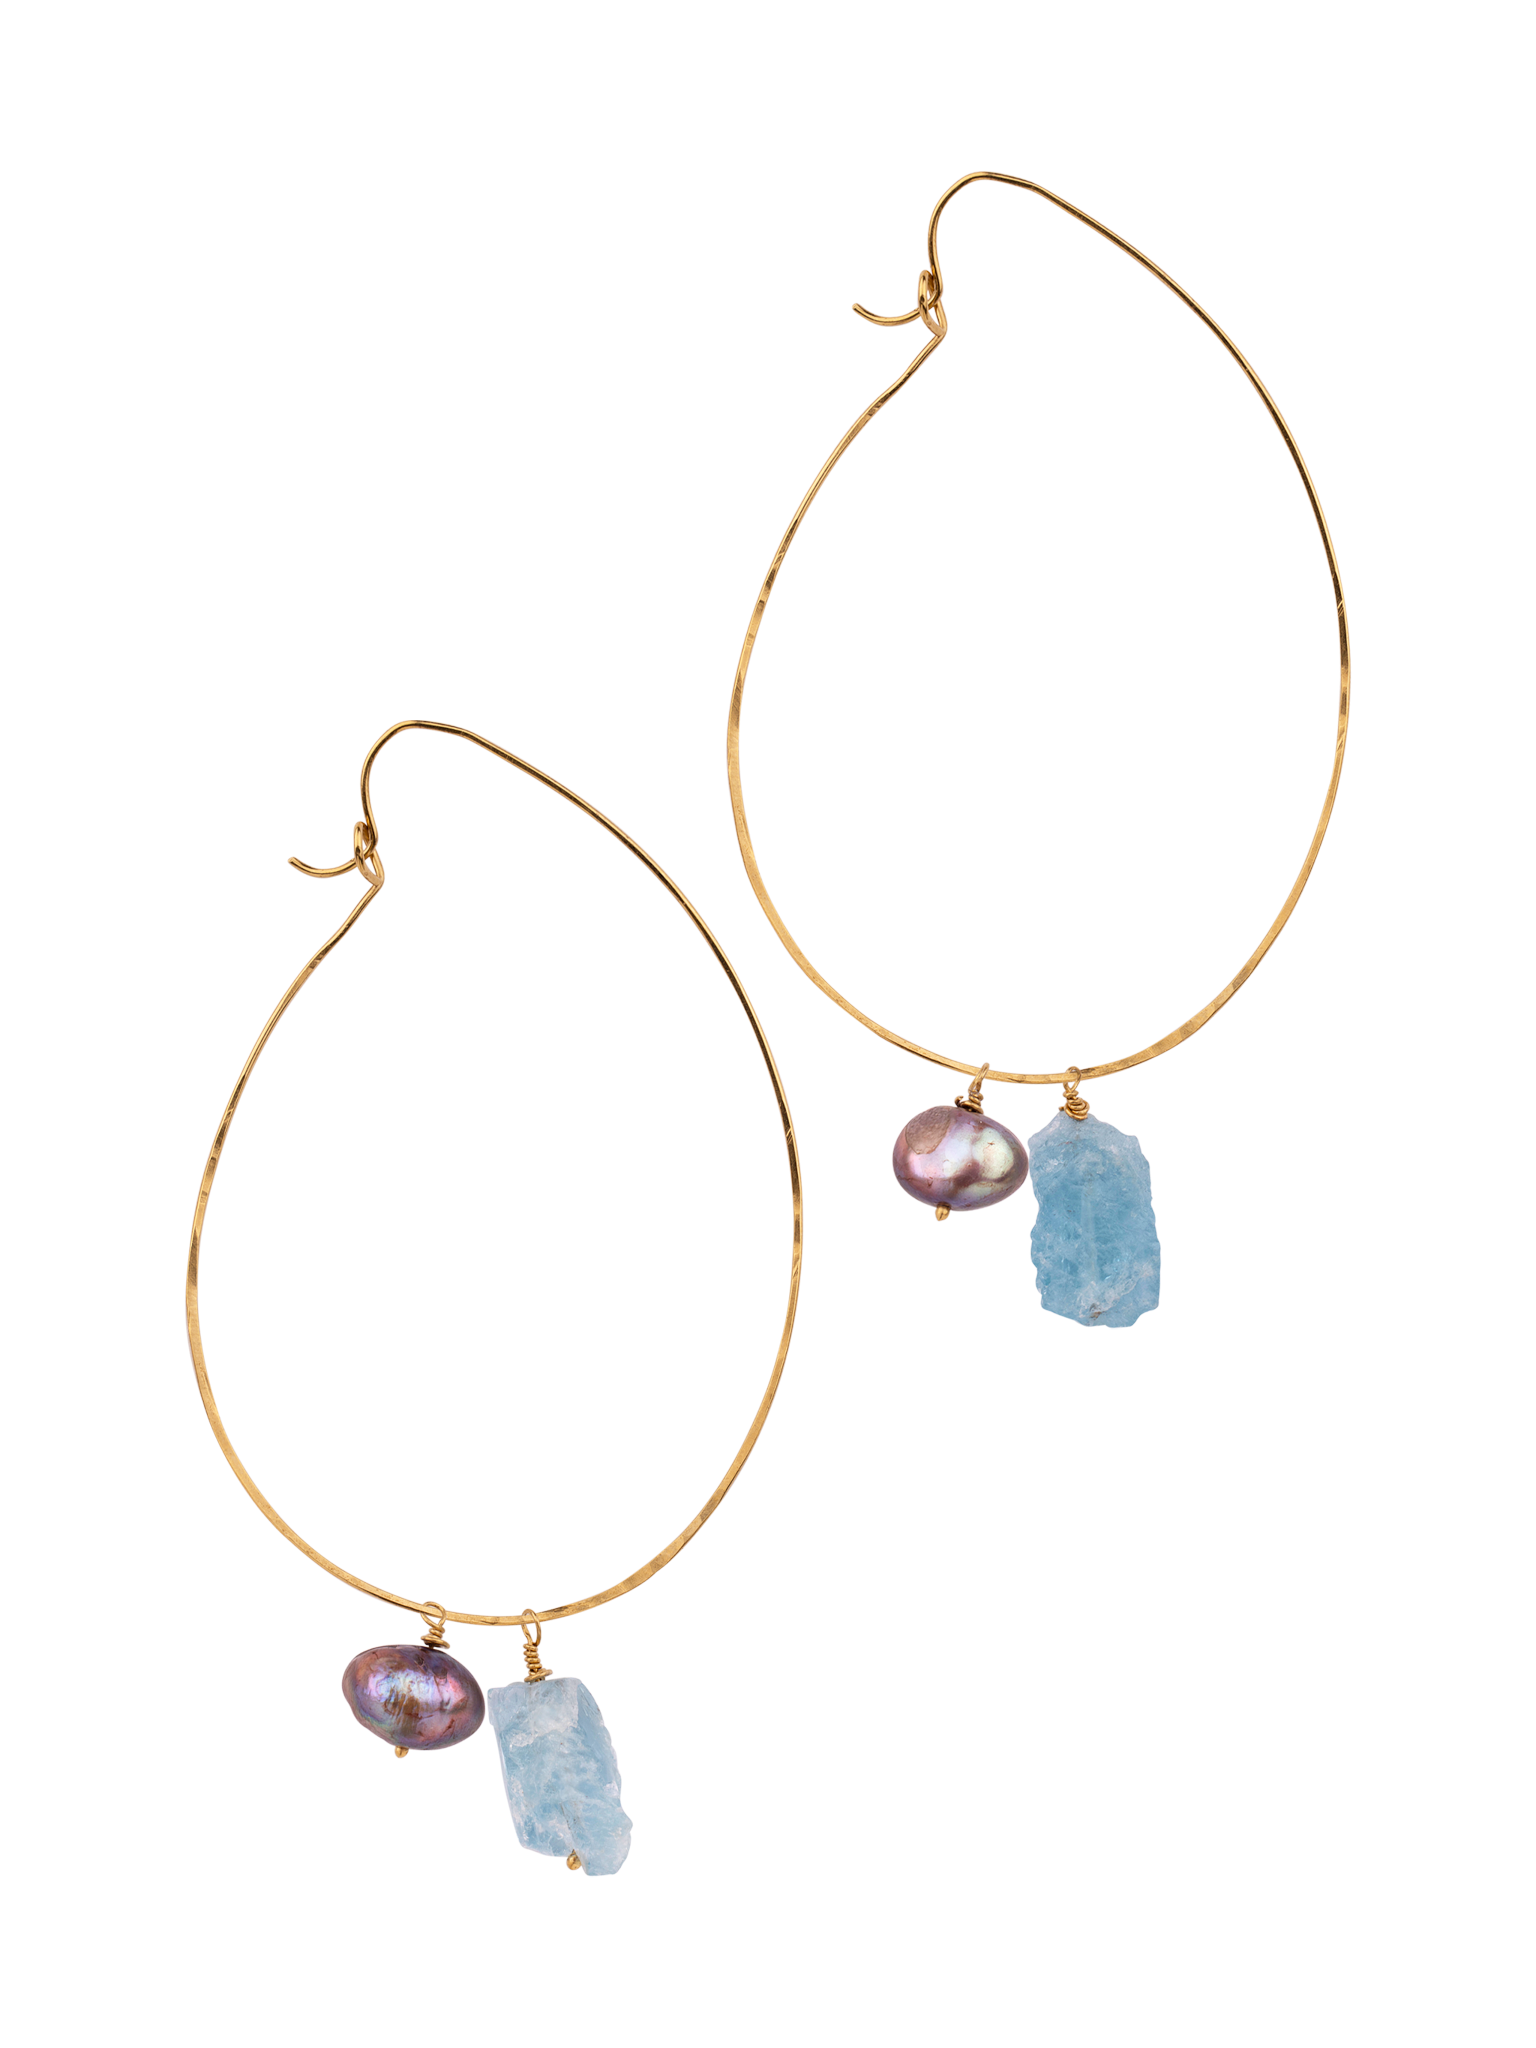 Etretat rough aquamarine earrings